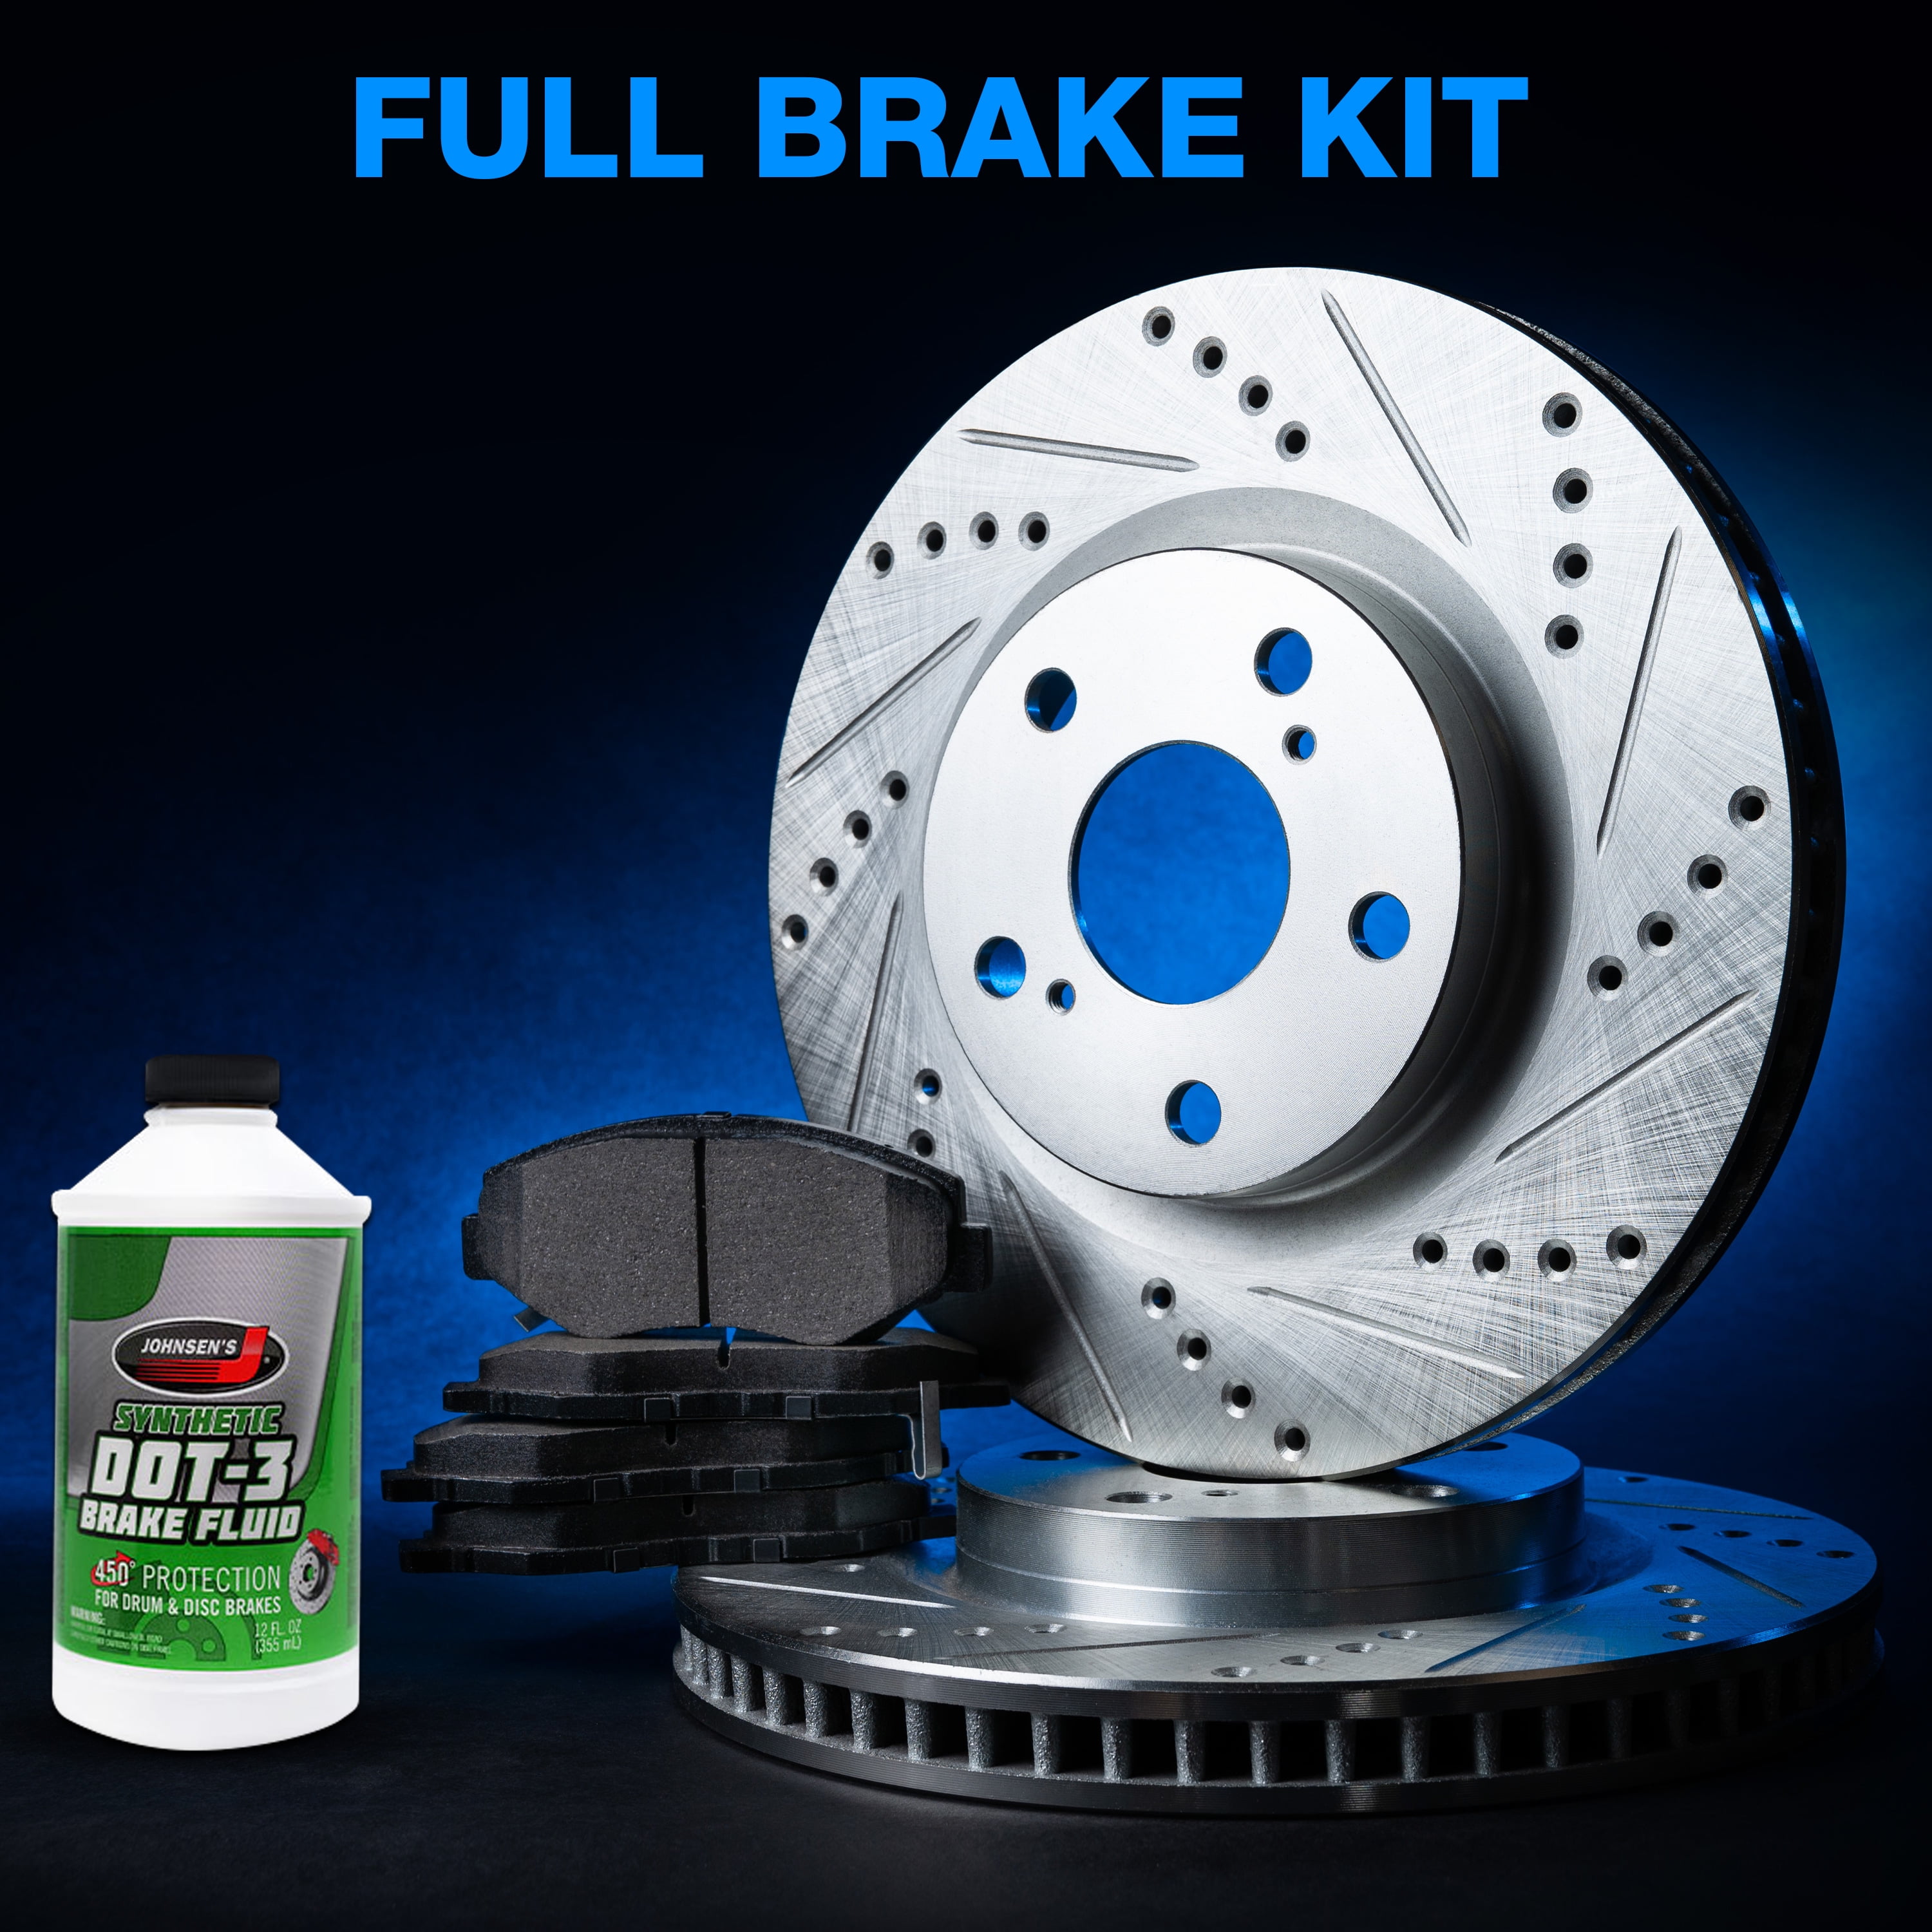 Power Sport Front Brakes and Rotors Kit |Front Brake Pads| Brake